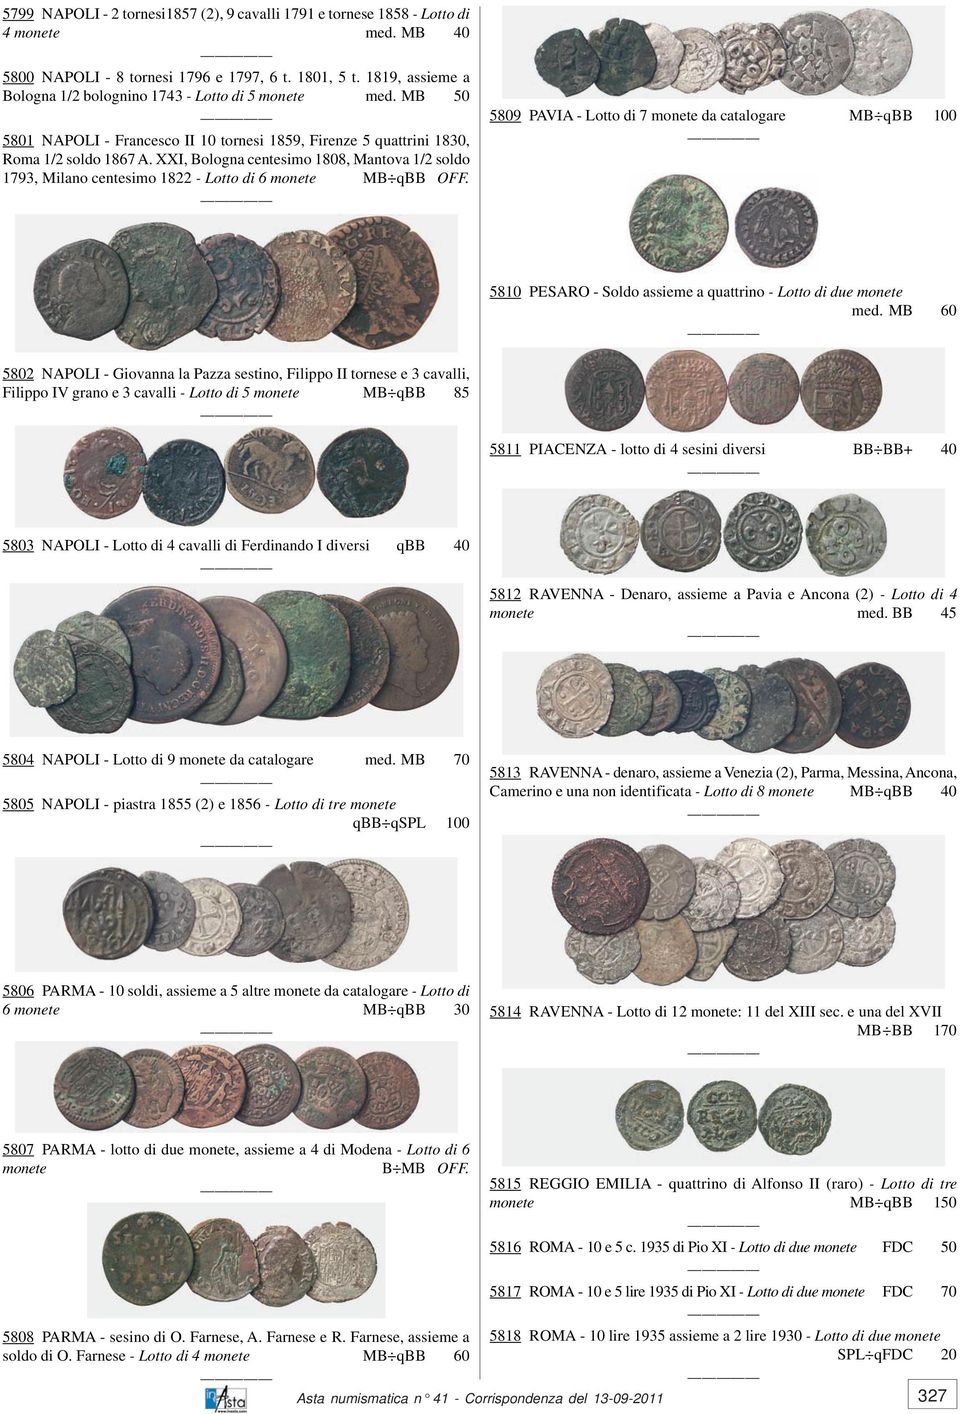 XXI, Bologna centesimo 1808, Mantova 1/2 soldo 1793, Milano centesimo 1822 - Lotto di 6 monete MB qbb OFF.